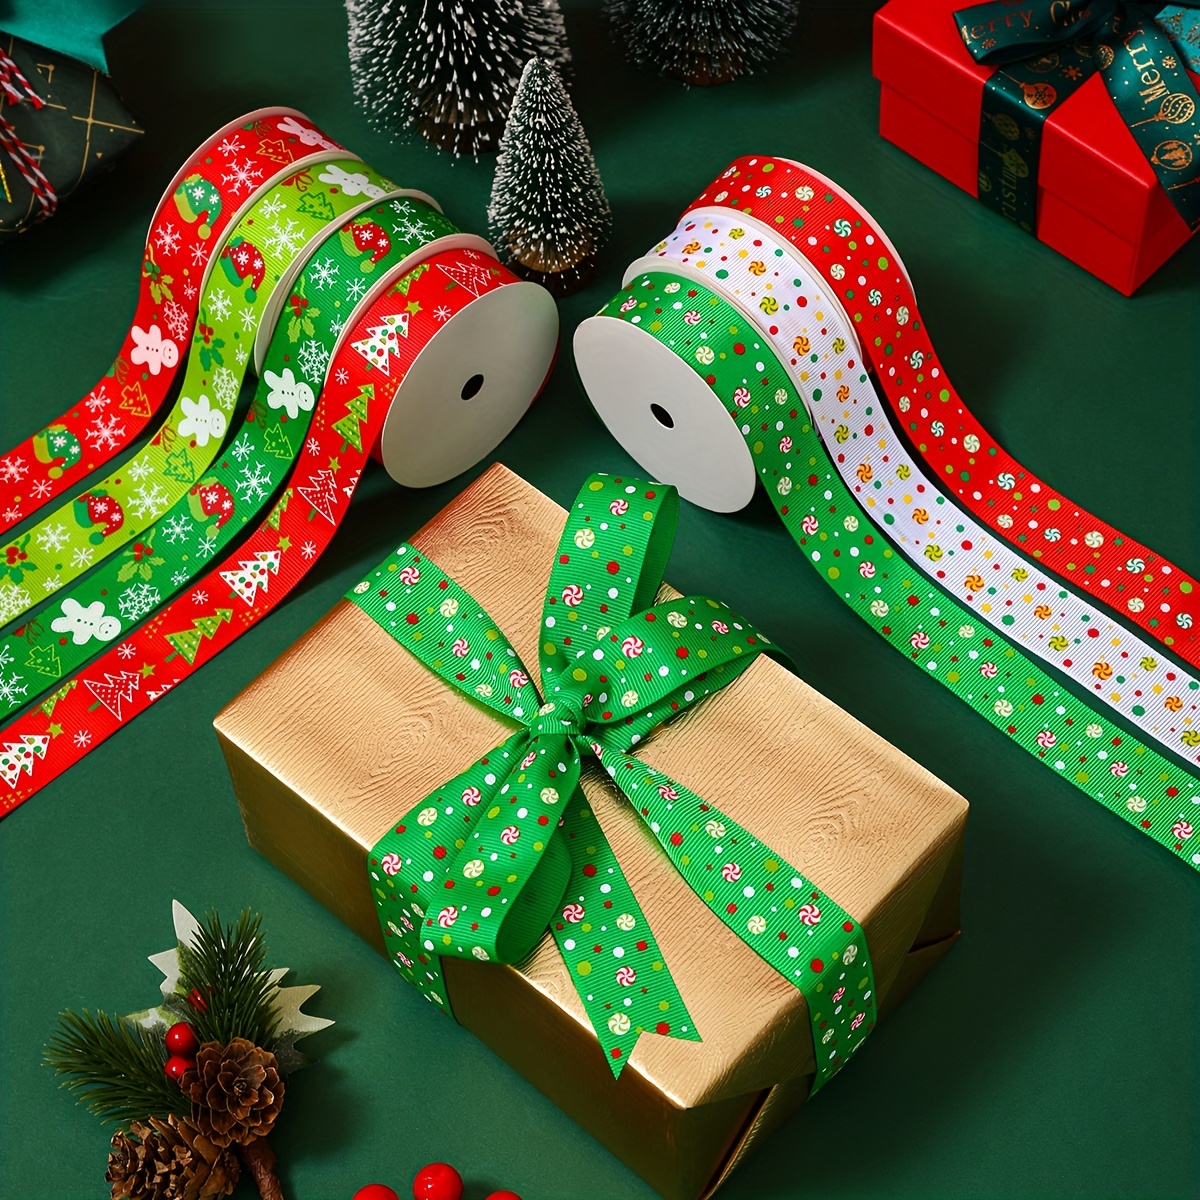 Danceemangoos Gift Ribbons 4pcs Merry Christmas Printing Ribbon Burlap Curling Gift Ribbon for Gift Wrapping and Holiday Decorations Nativity Decor